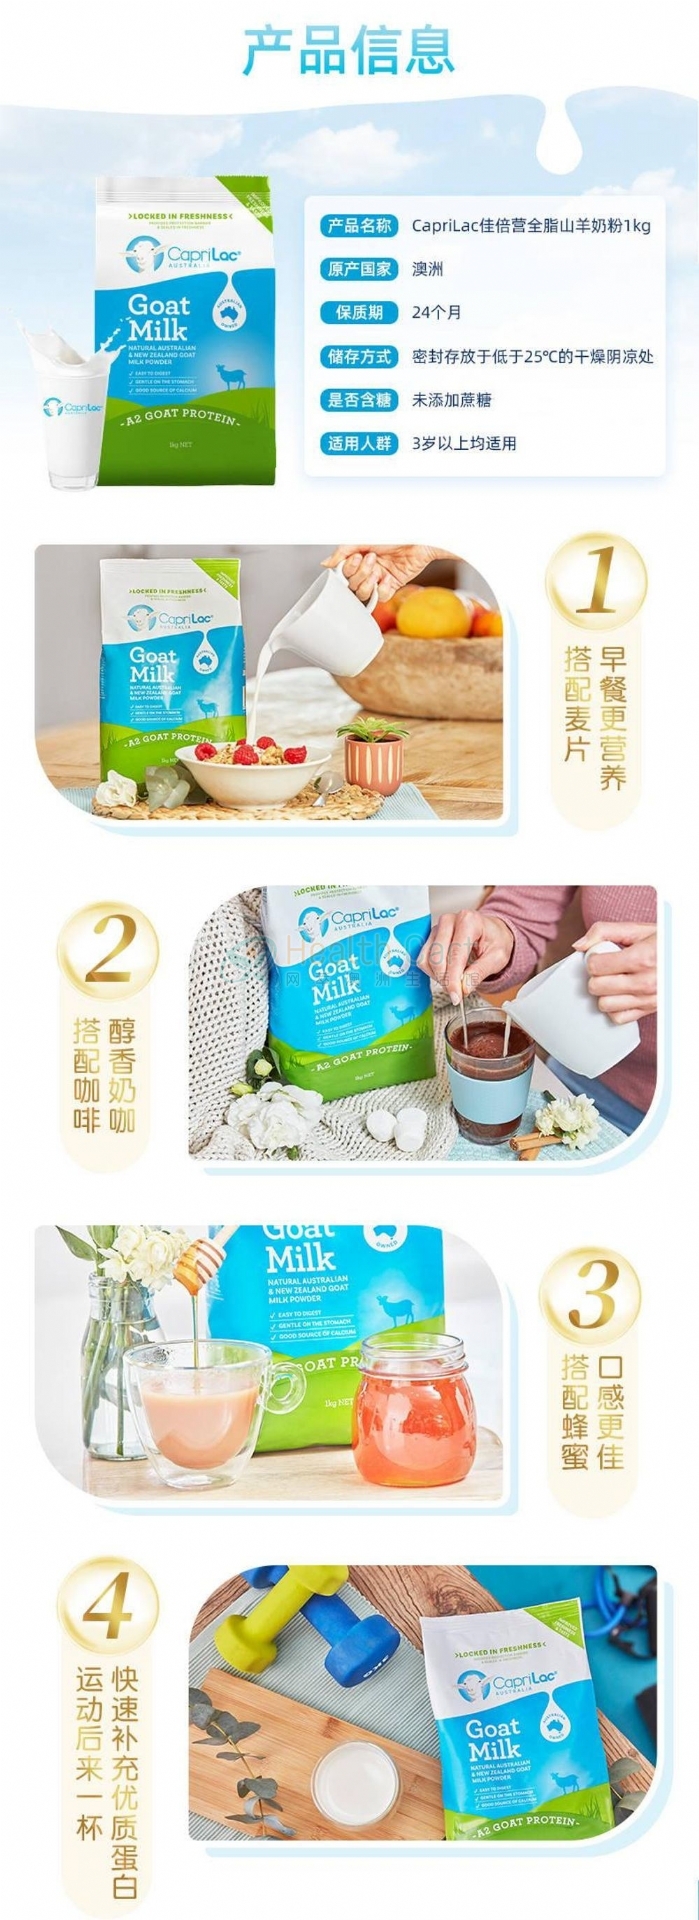 CapriLac成人羊奶粉（仅限发货到中国大陆，每个订单限购6包） - @caprilac goat milk powder 1kgmaximum 6 packs per order - 14 - Healthcart 网萃澳洲生活馆